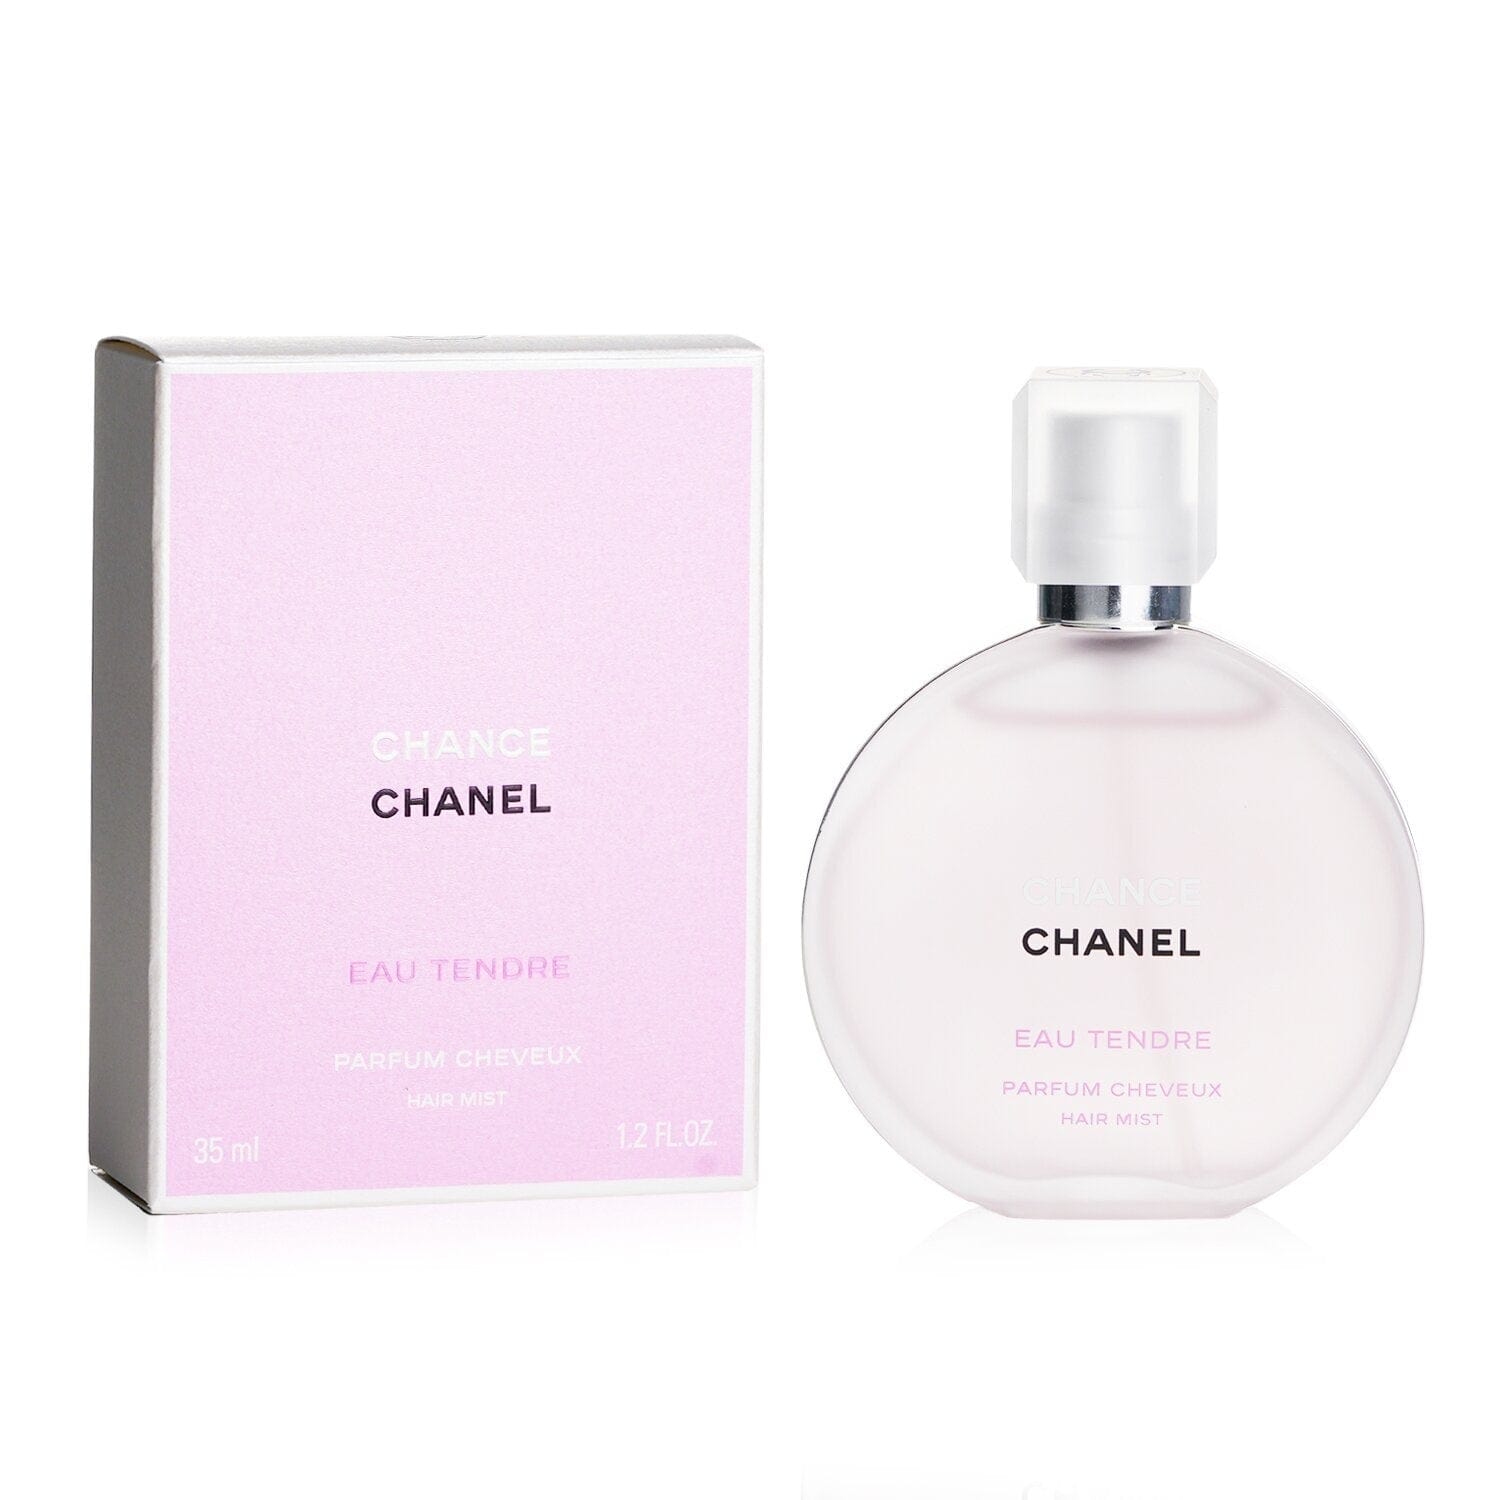 Chanel Chance Eau Tendre - Cheveux Hair Mist, 35 ml